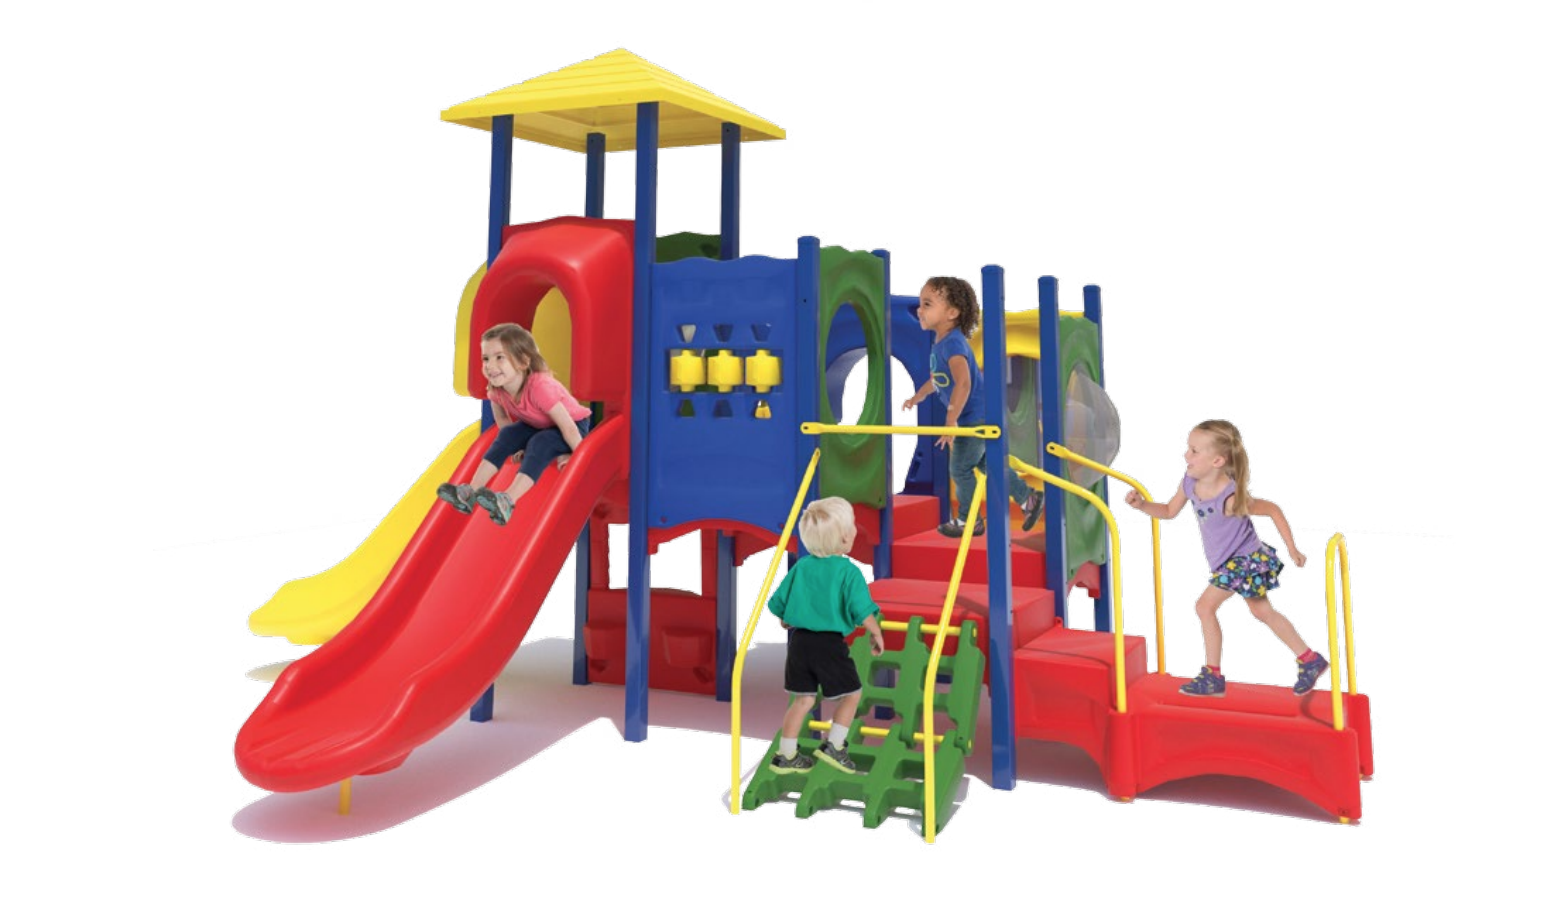 Toddler choice playground set